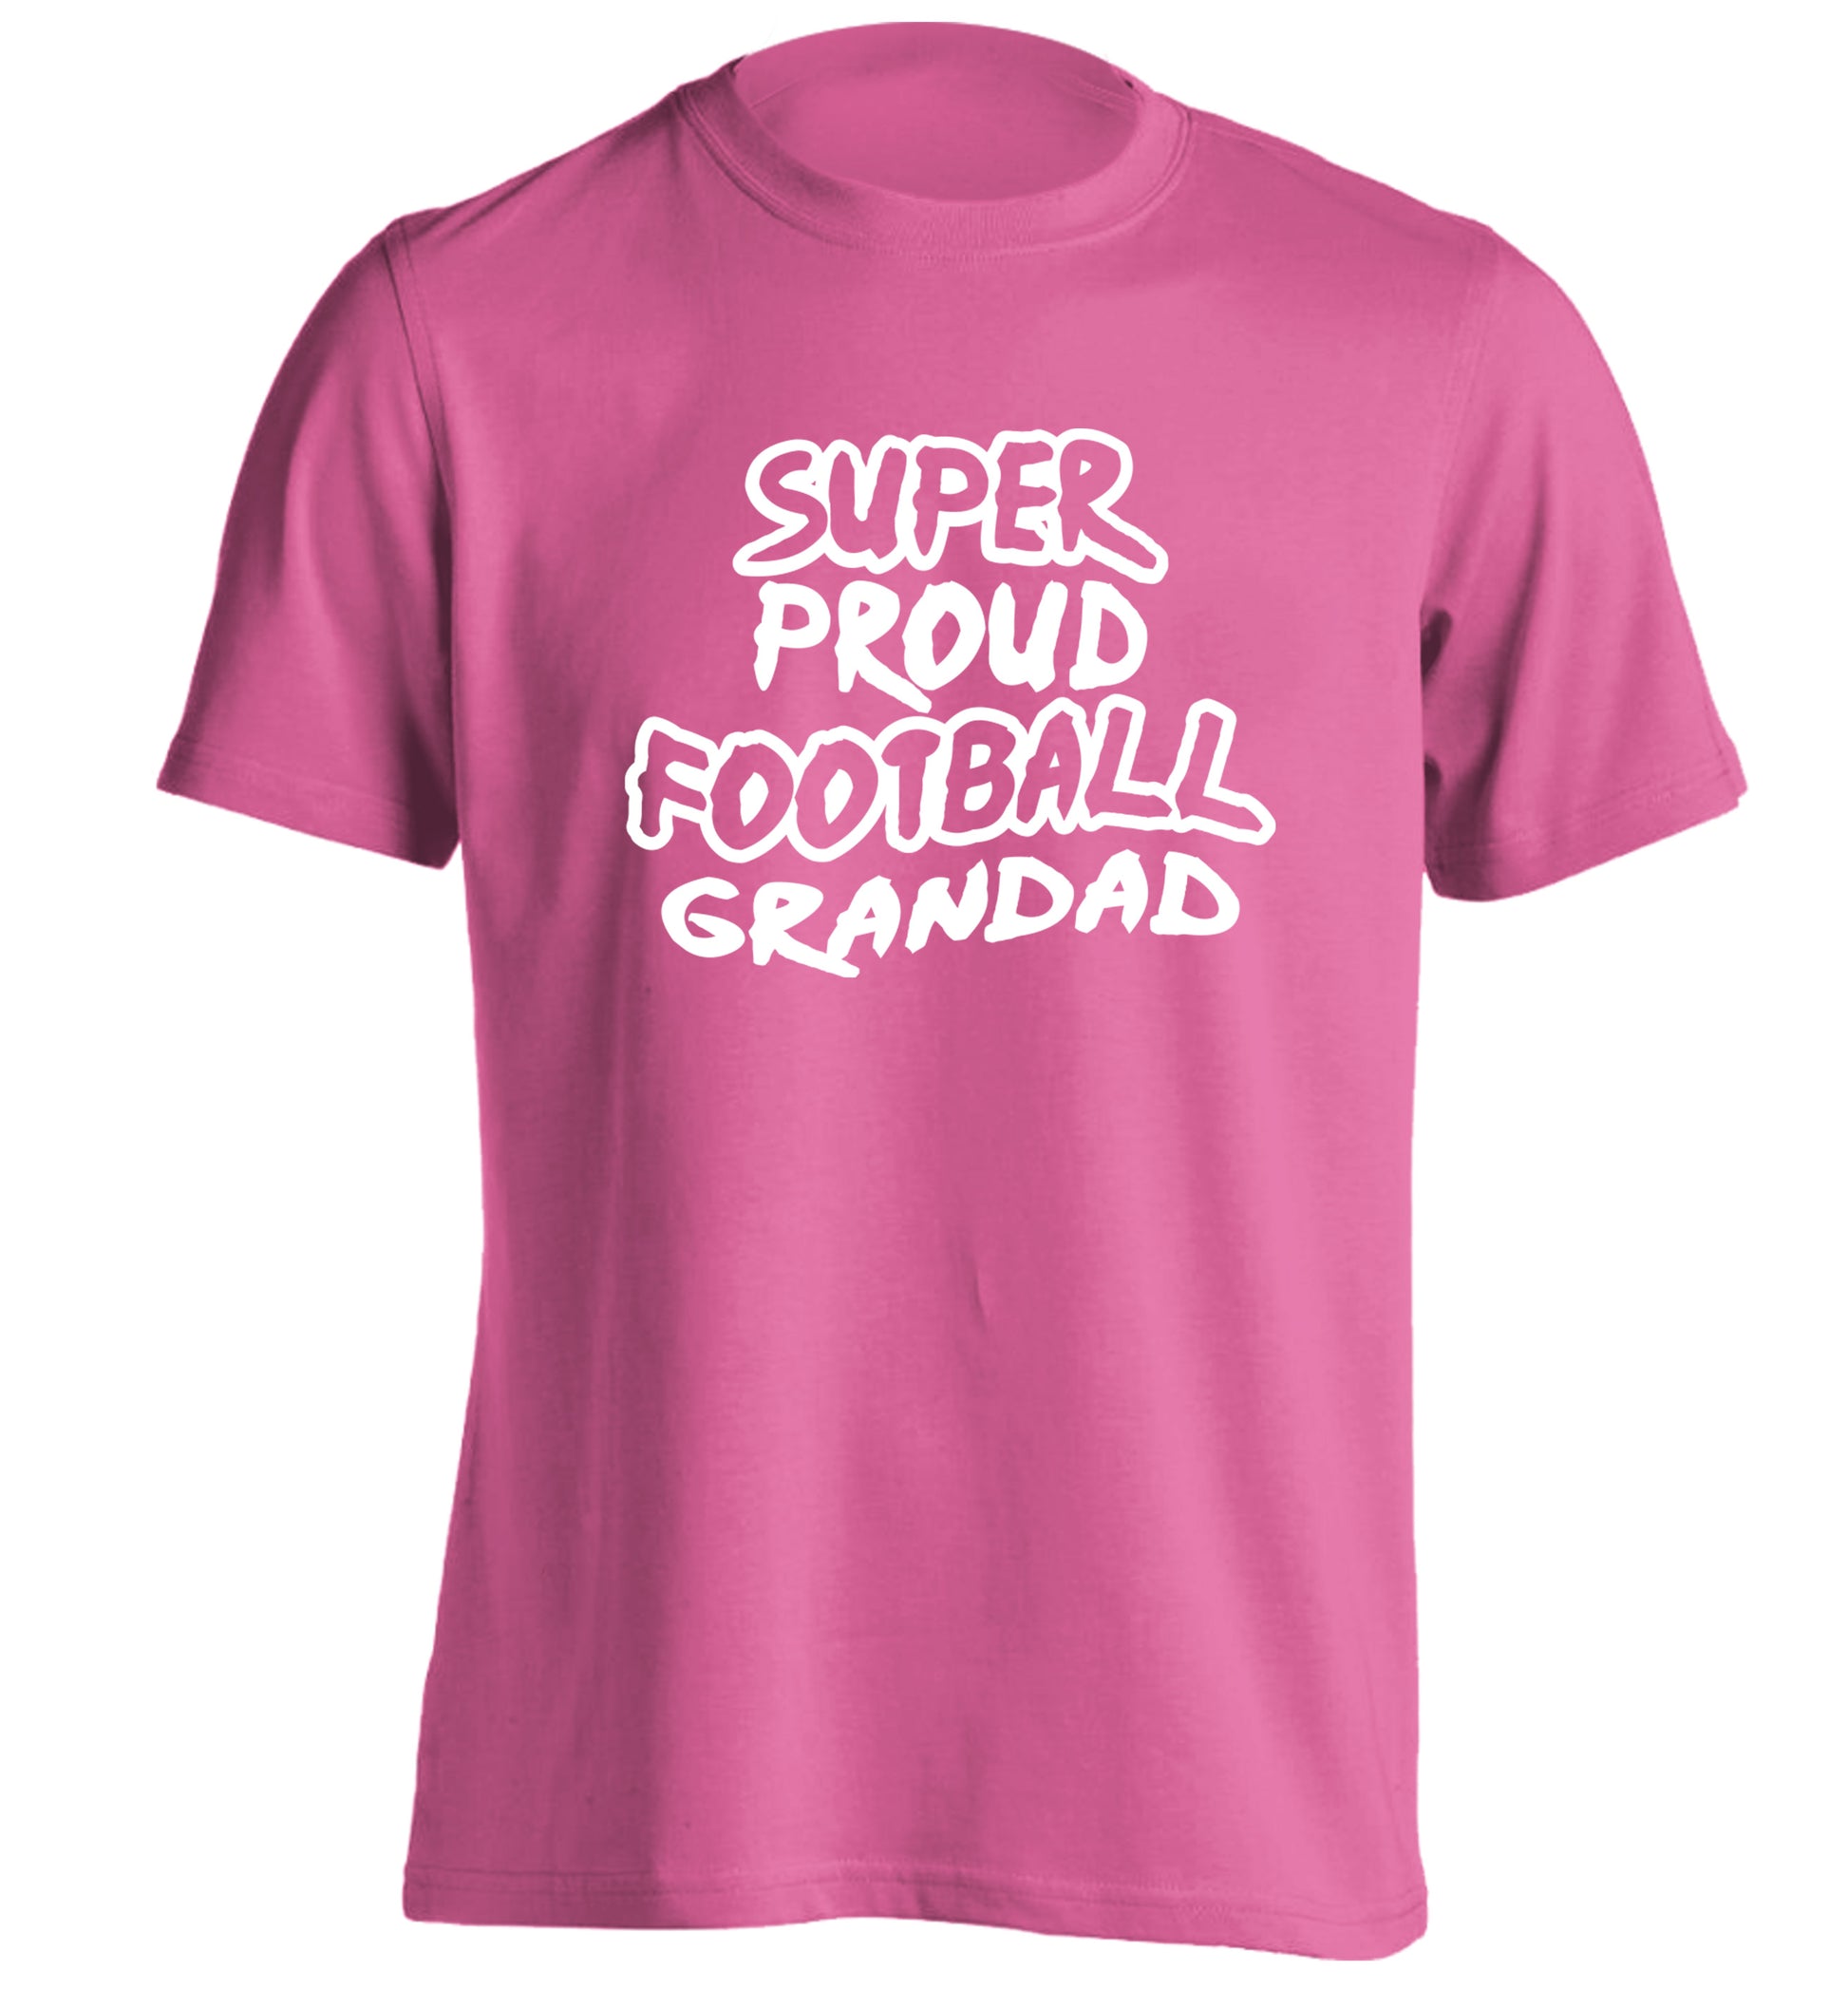 Super proud football grandad adults unisexpink Tshirt 2XL